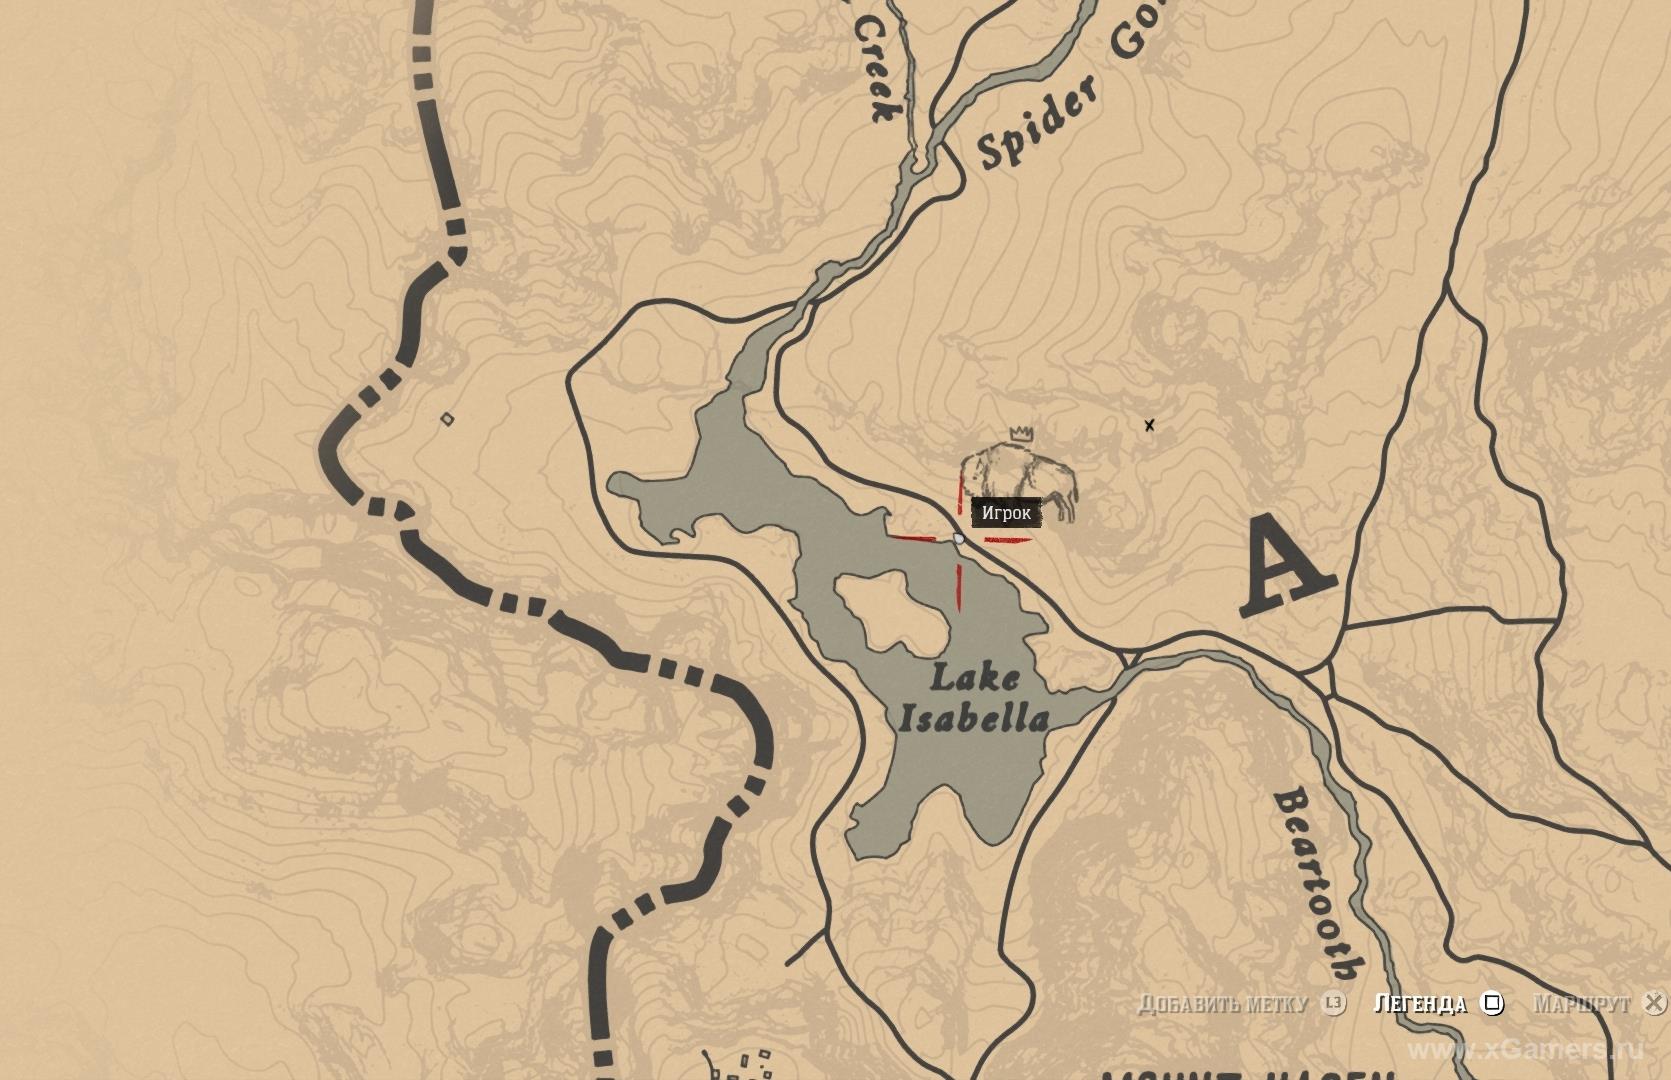 Location the Legendary Bison 